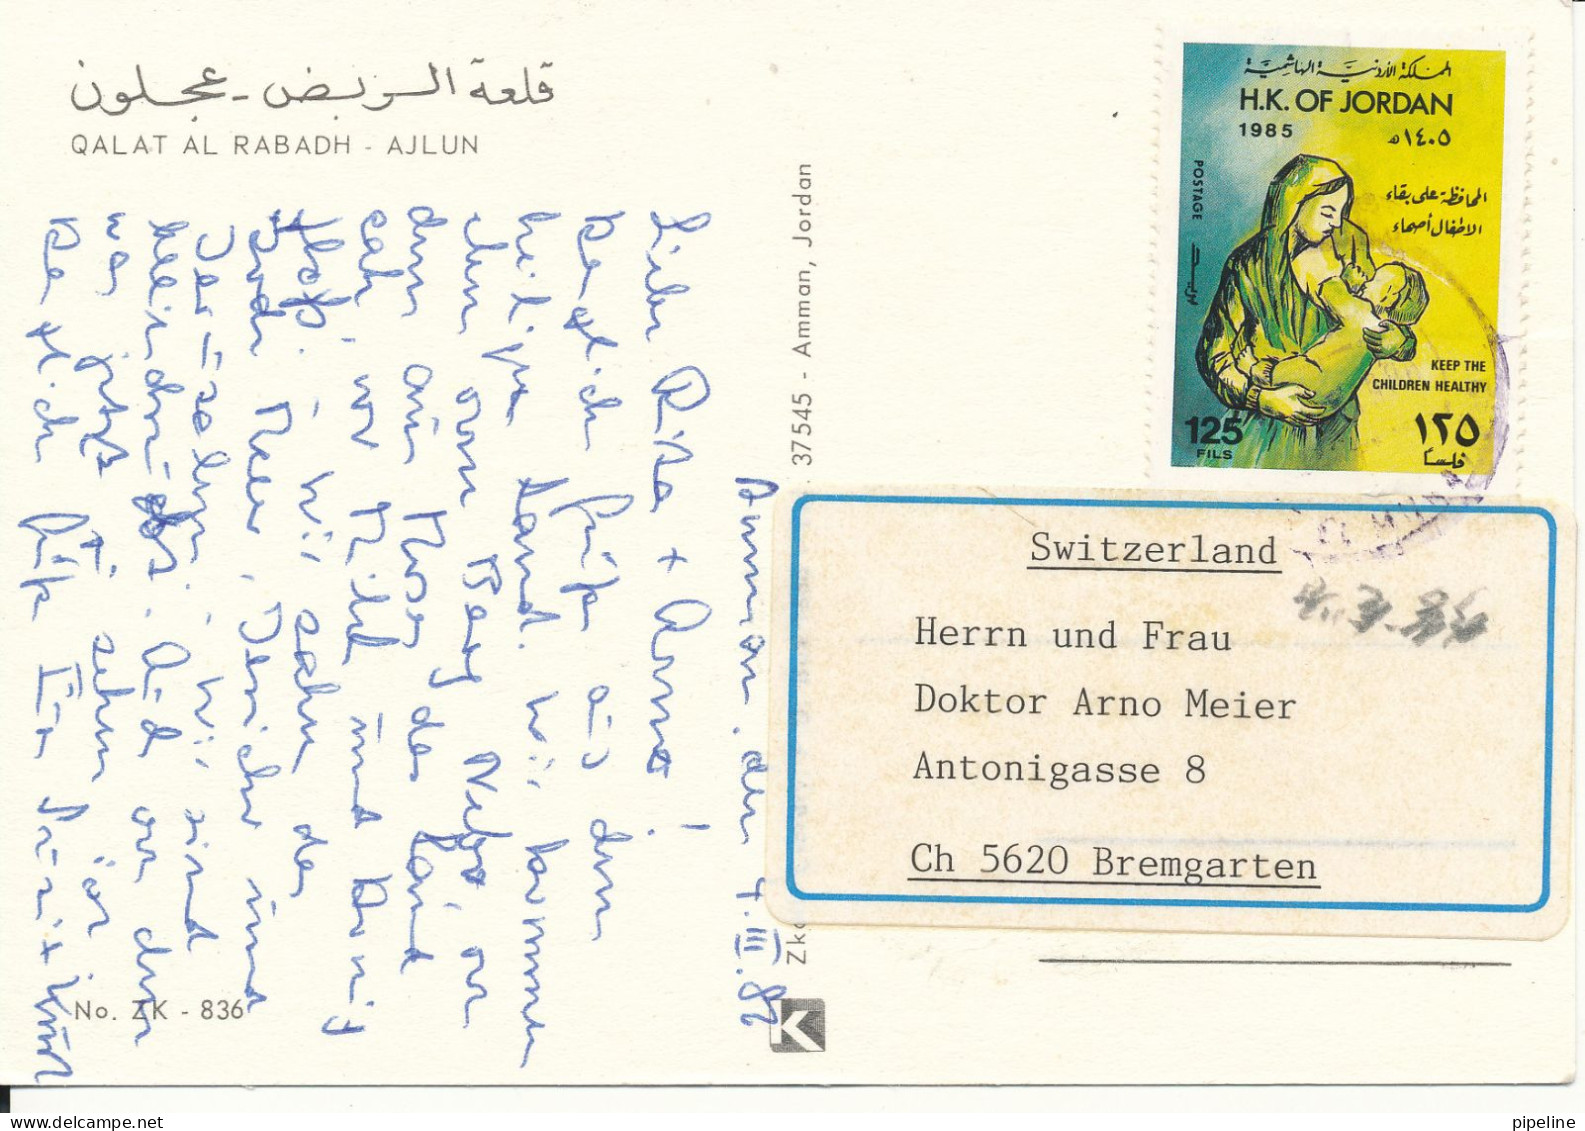 Jordan Postcard Sent To Switzerland 4-3-1986 (Qalat Al Rabadh Ajlun) - Jordan